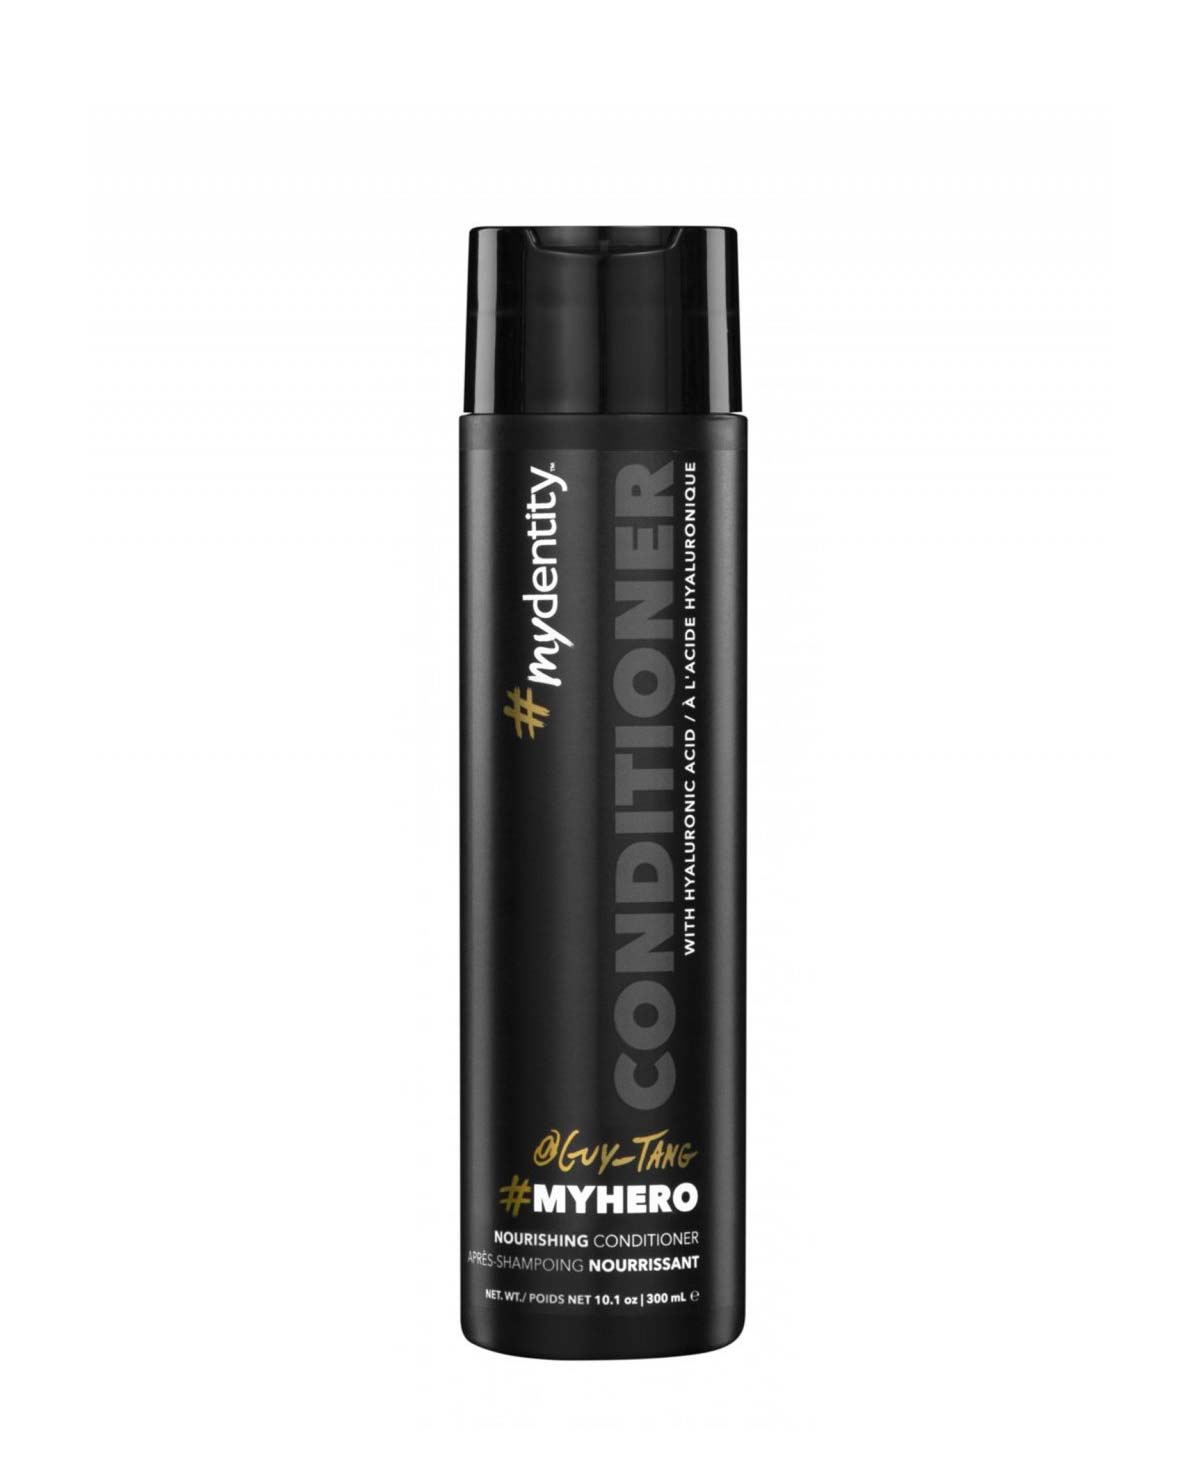 Mydentity - MyHero Nourishing Conditioner 300ml 